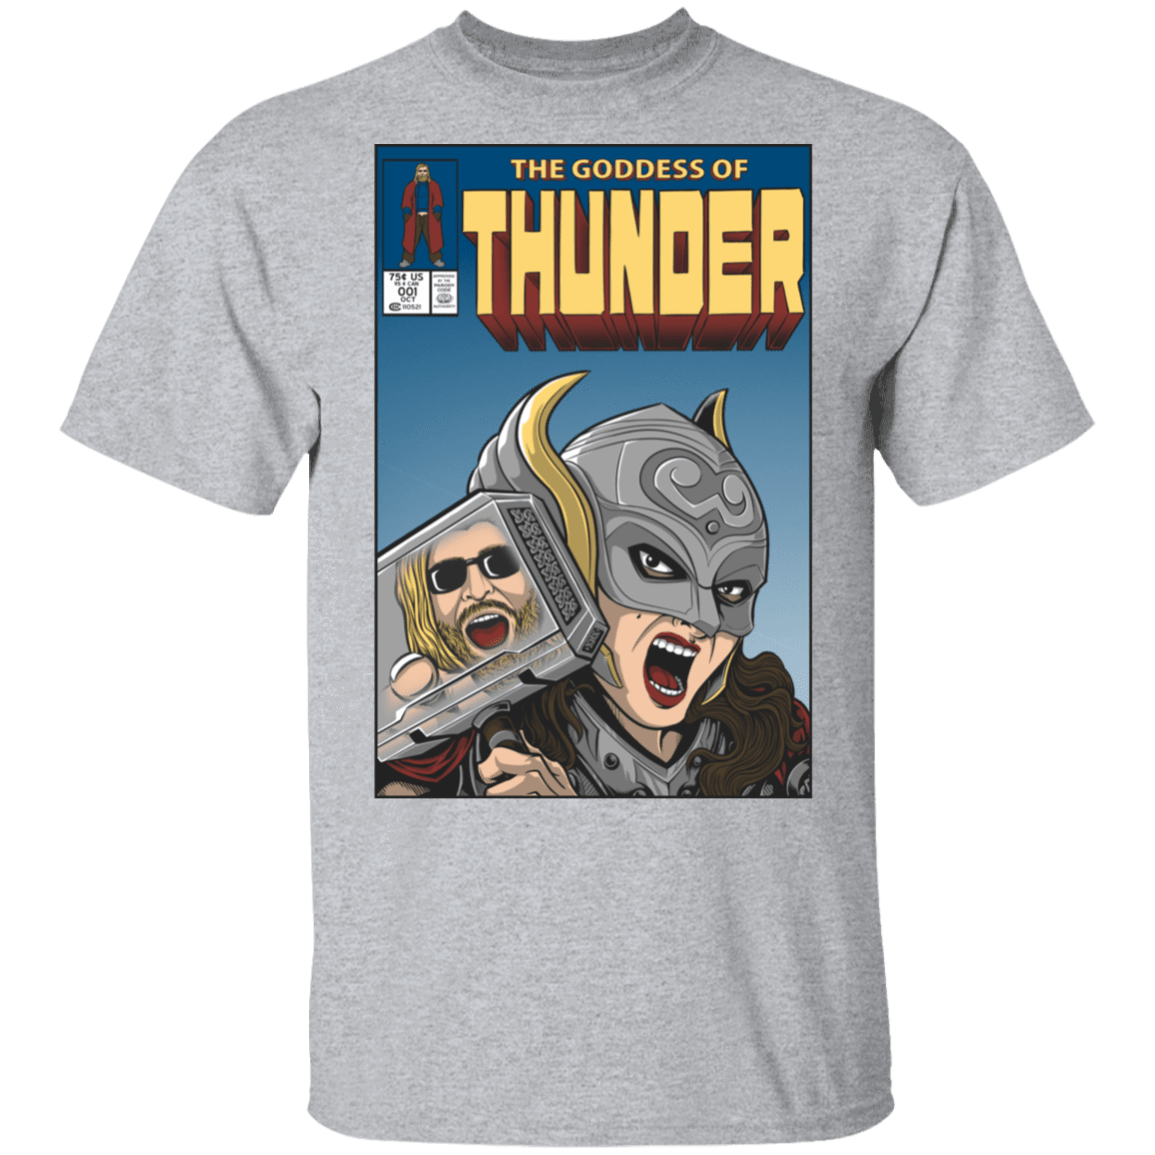 T-Shirts Sport Grey / S The Goddess of Thunder T-Shirt